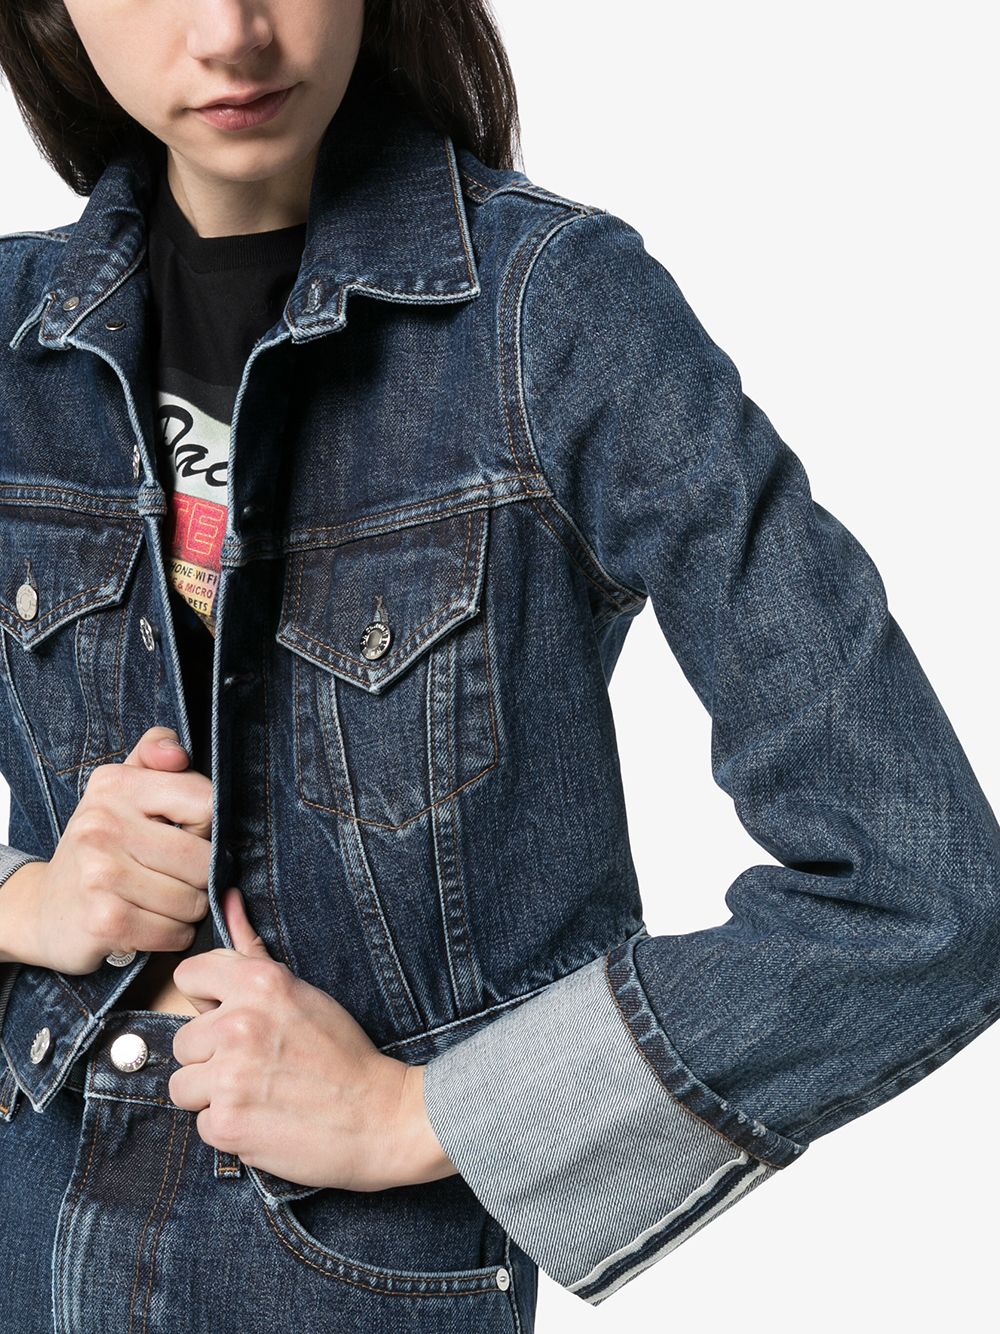 фото Helmut lang укороченная джинсовая куртка fem little trucker